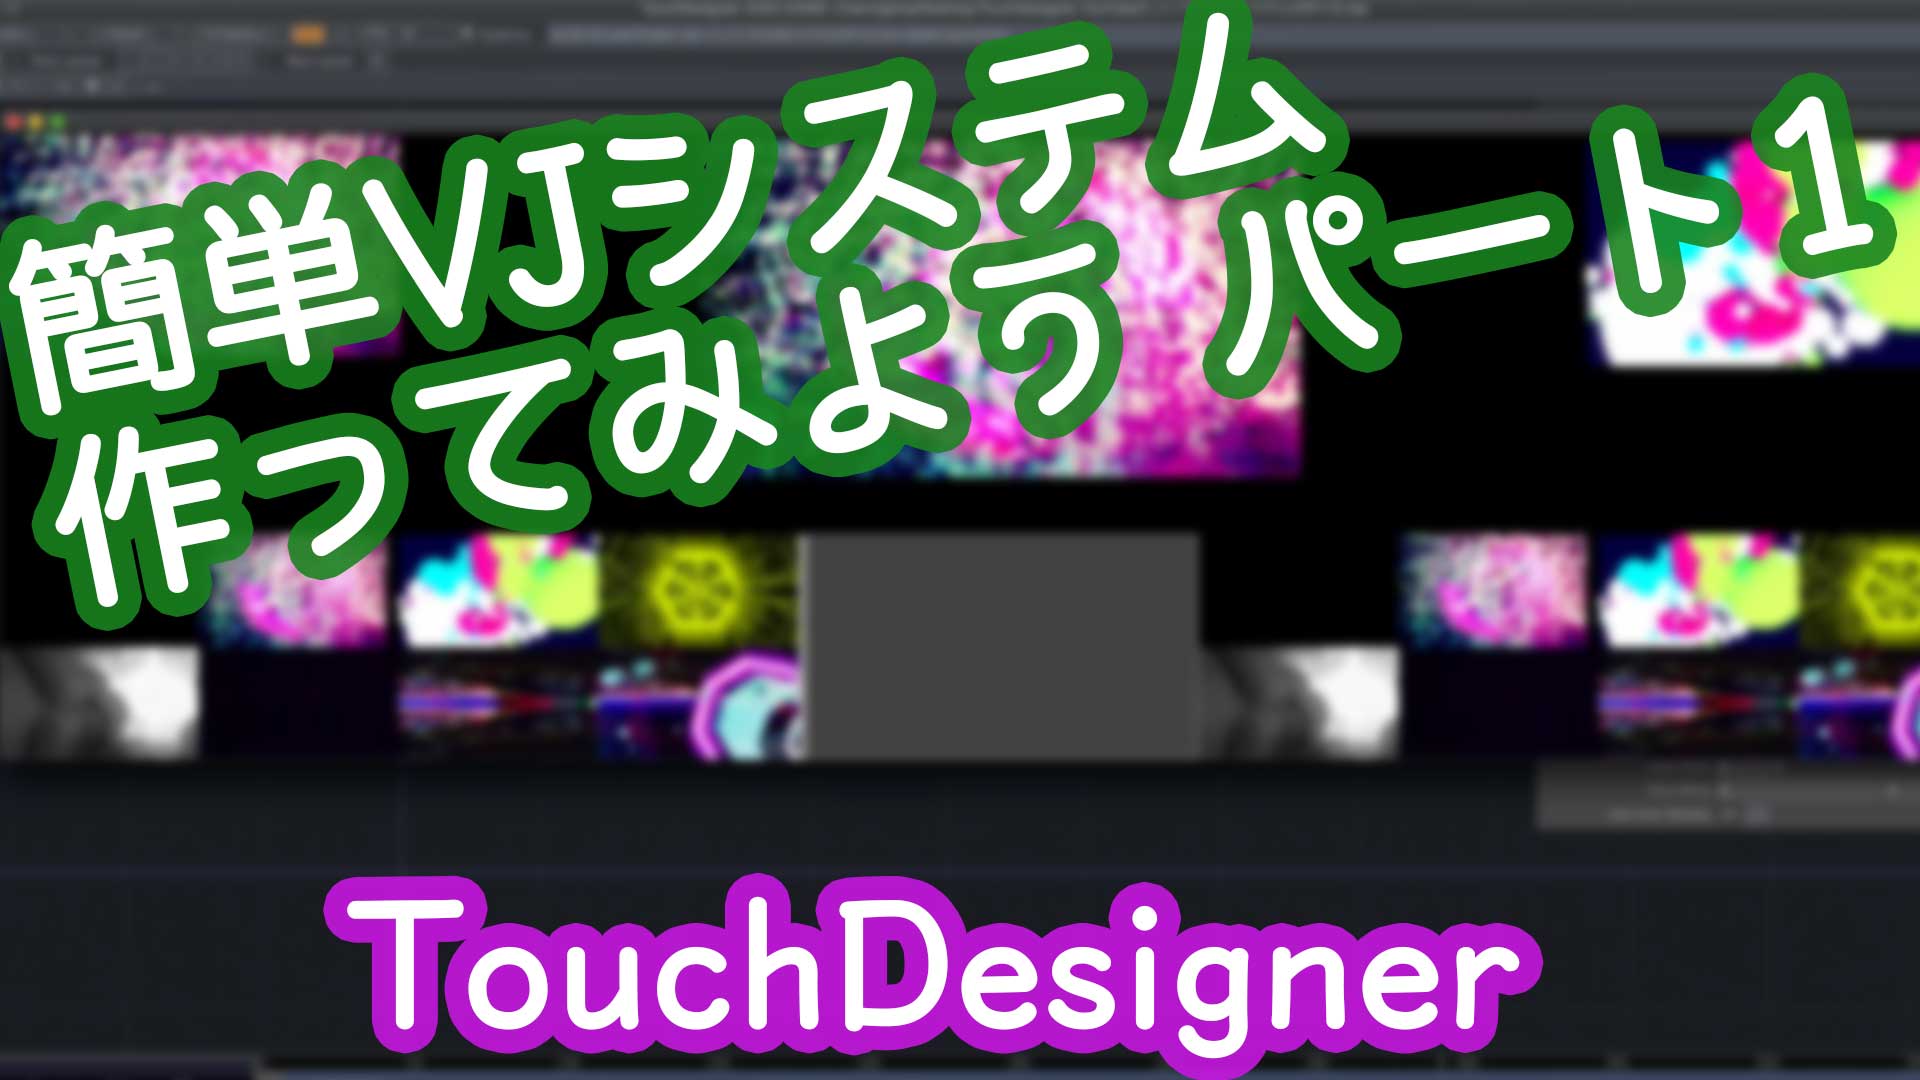 Touchdesigner 使い方 VJ